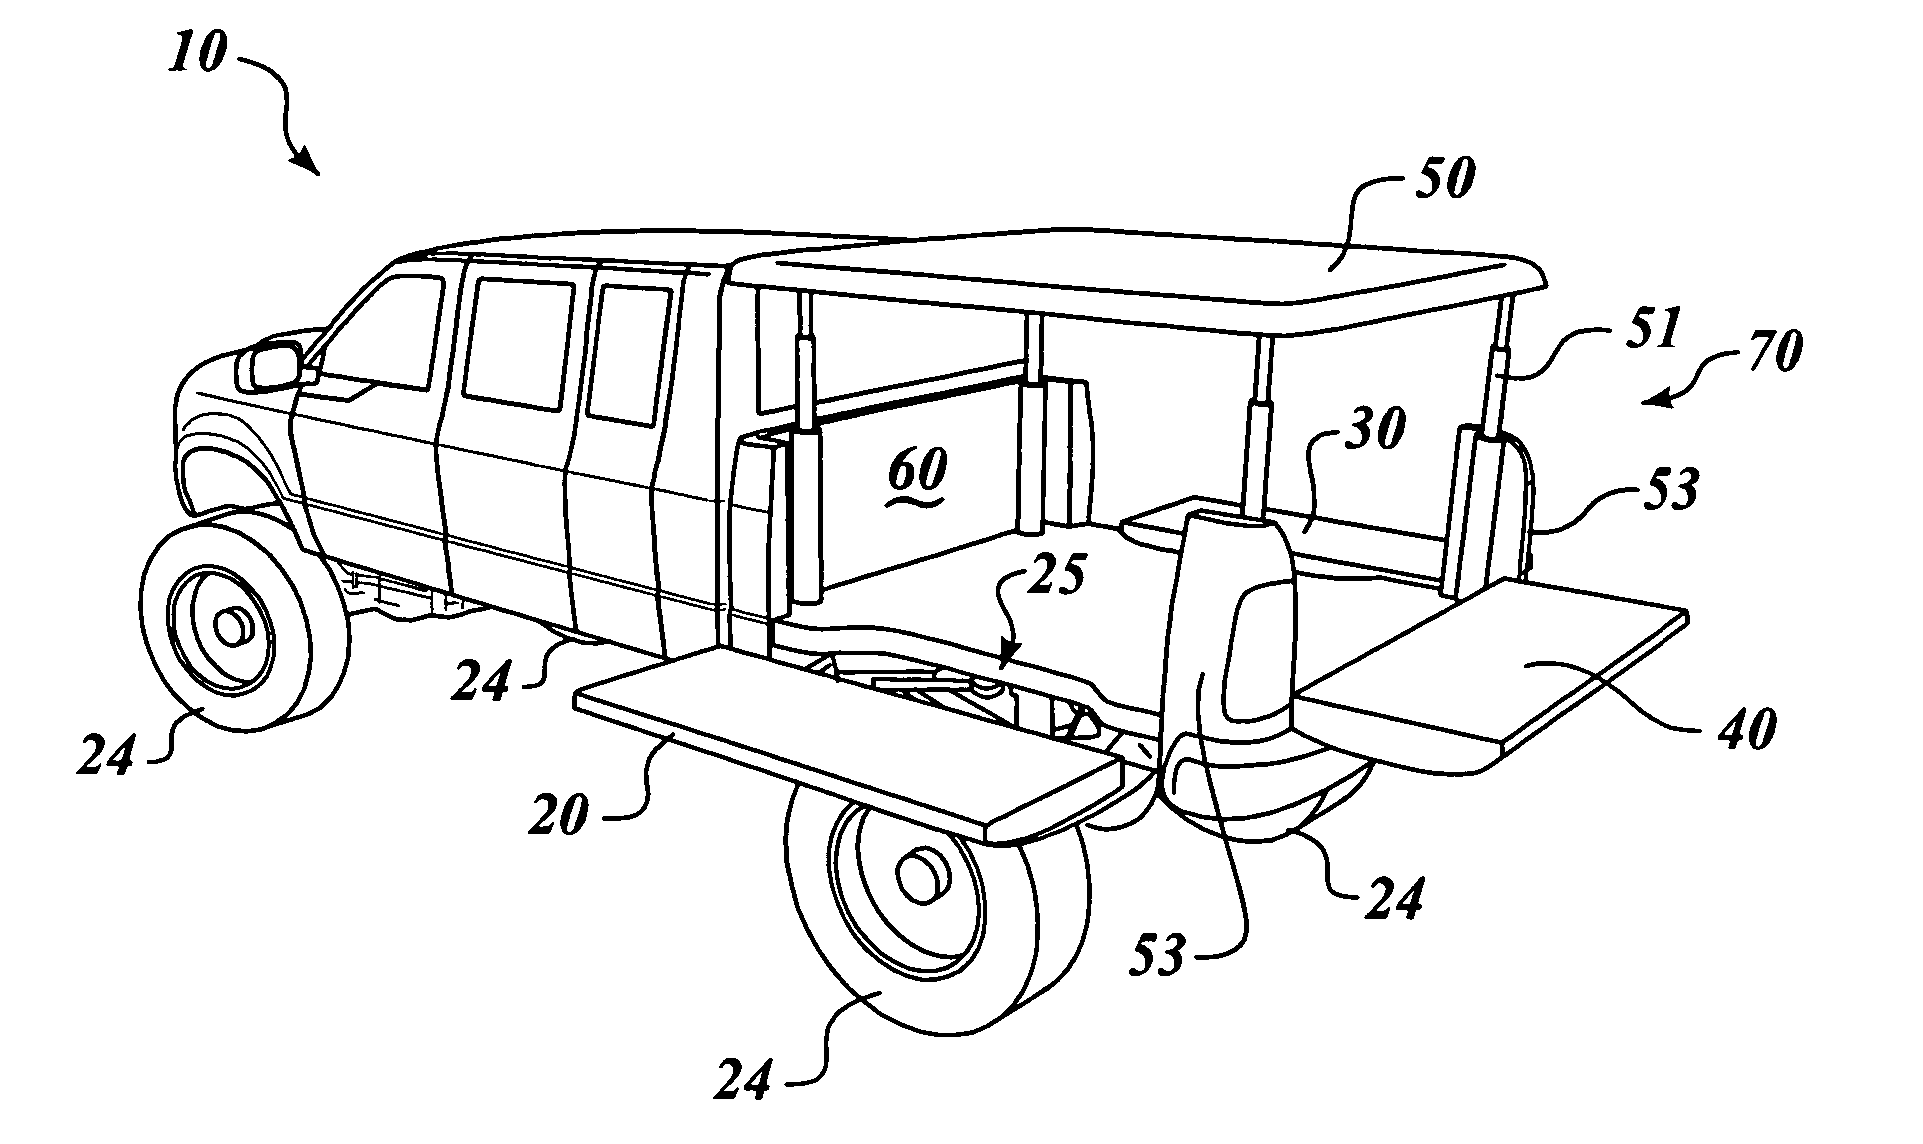 Truck with folding sidewalls